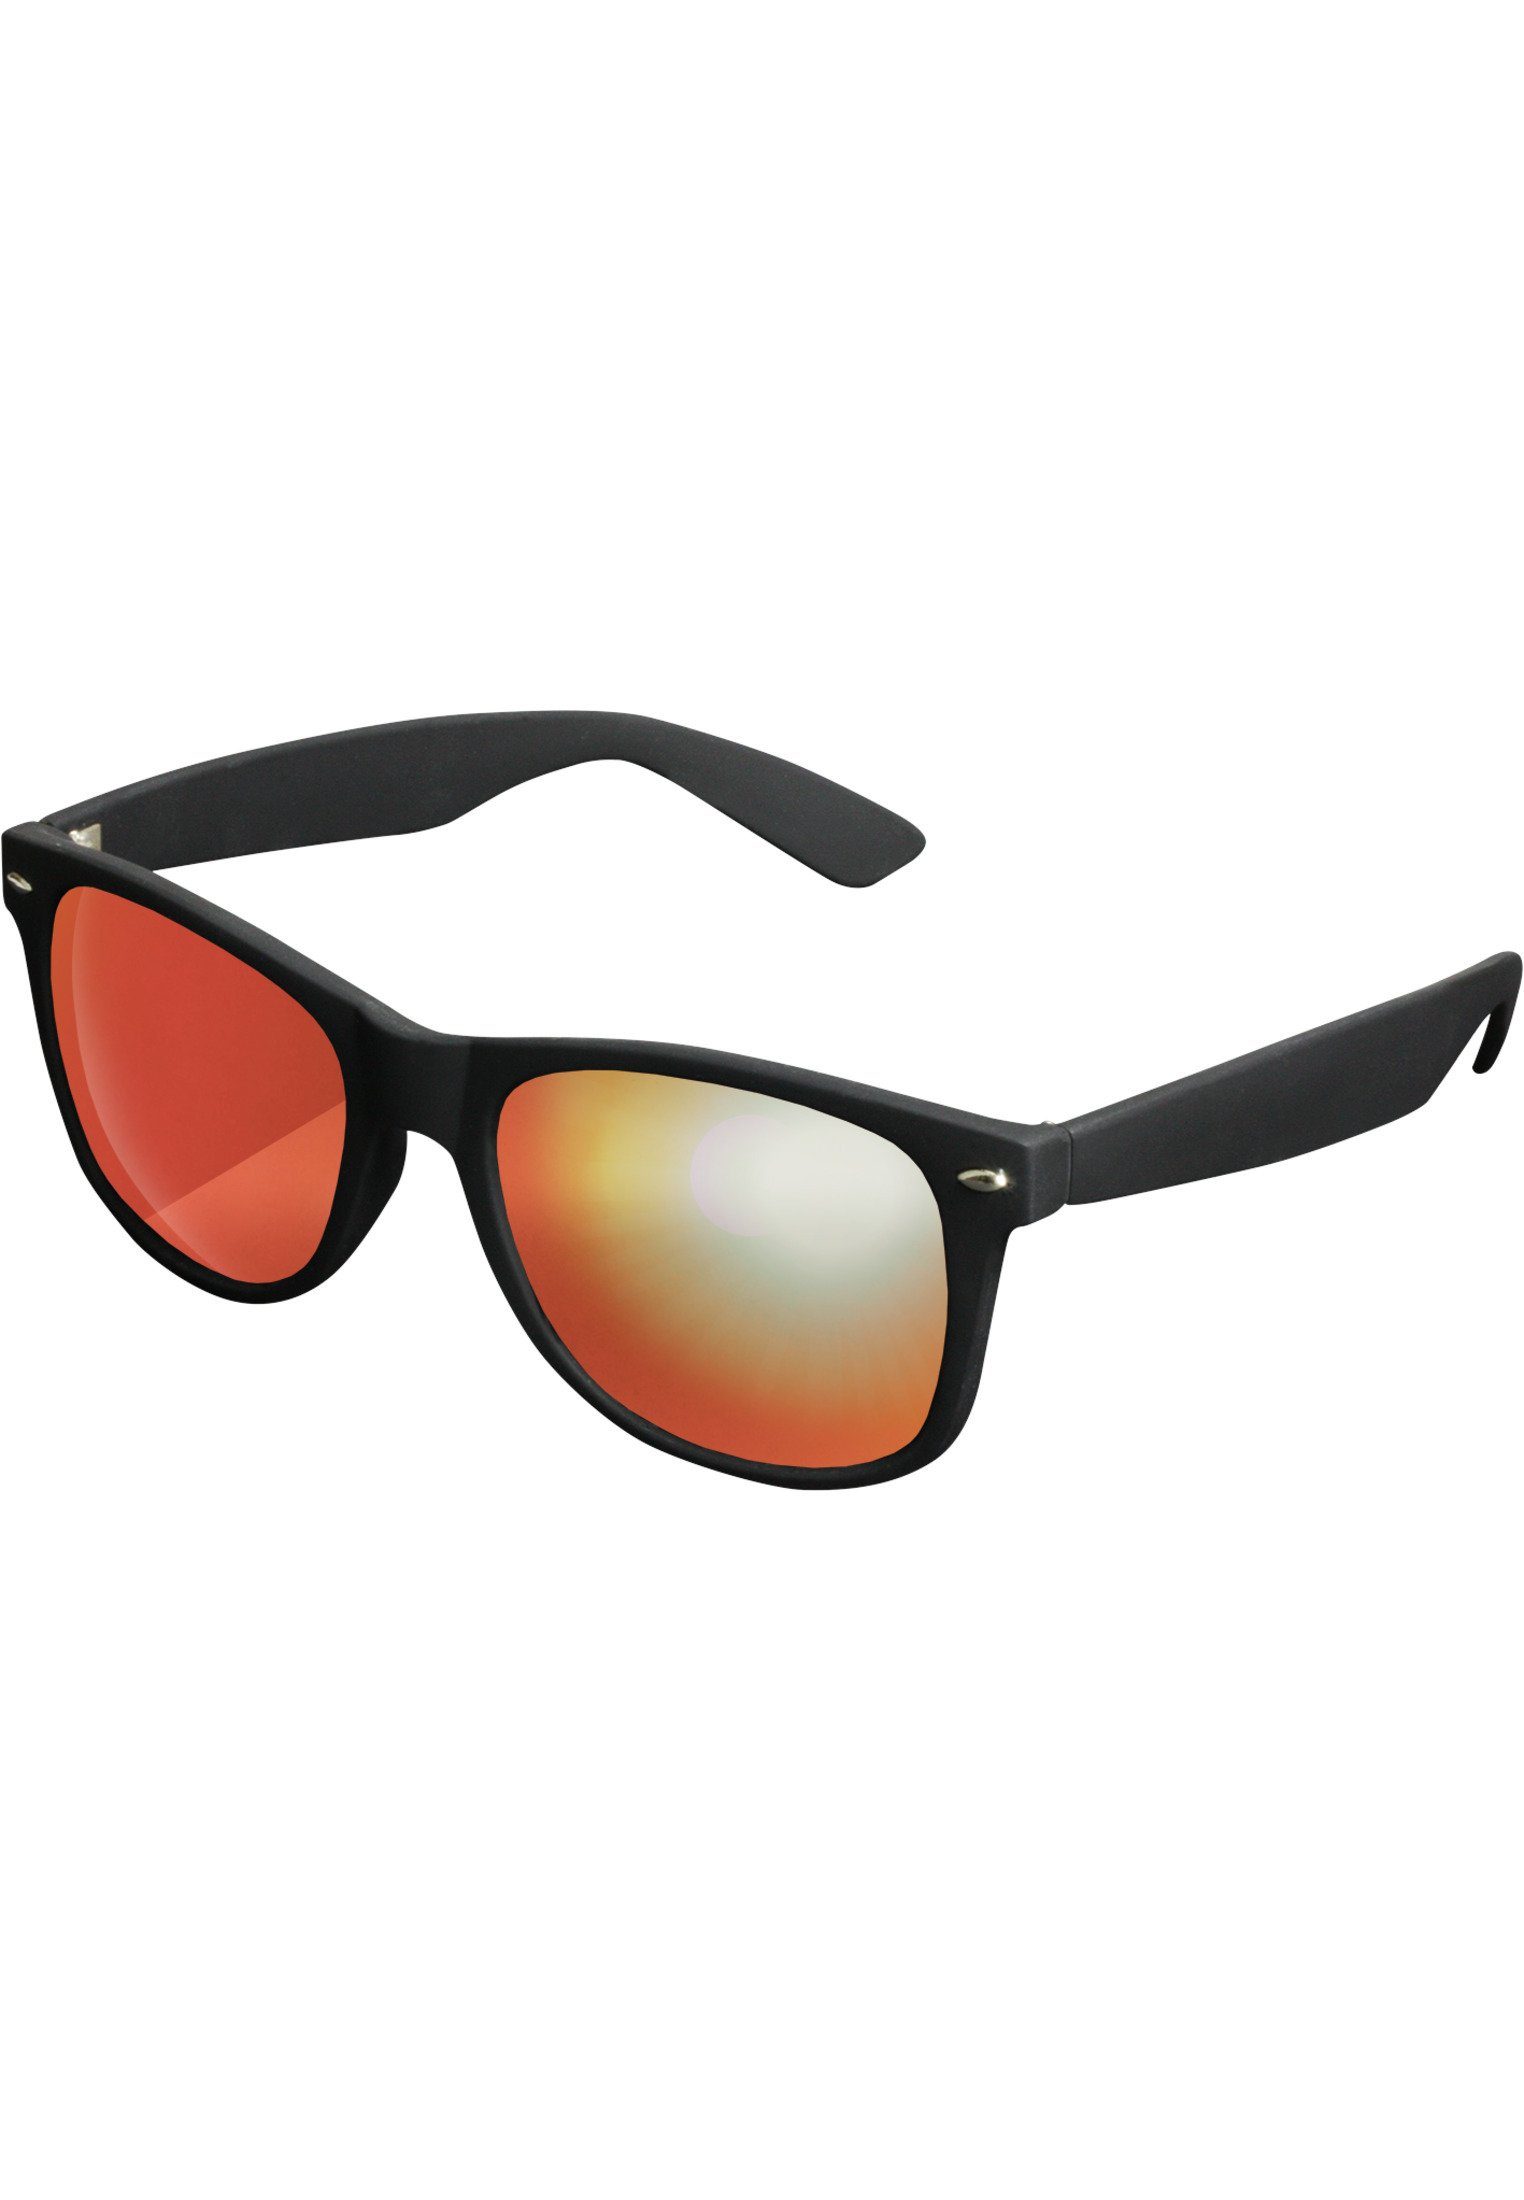 Likoma Sonnenbrille Sunglasses blk/red MSTRDS Accessoires Mirror